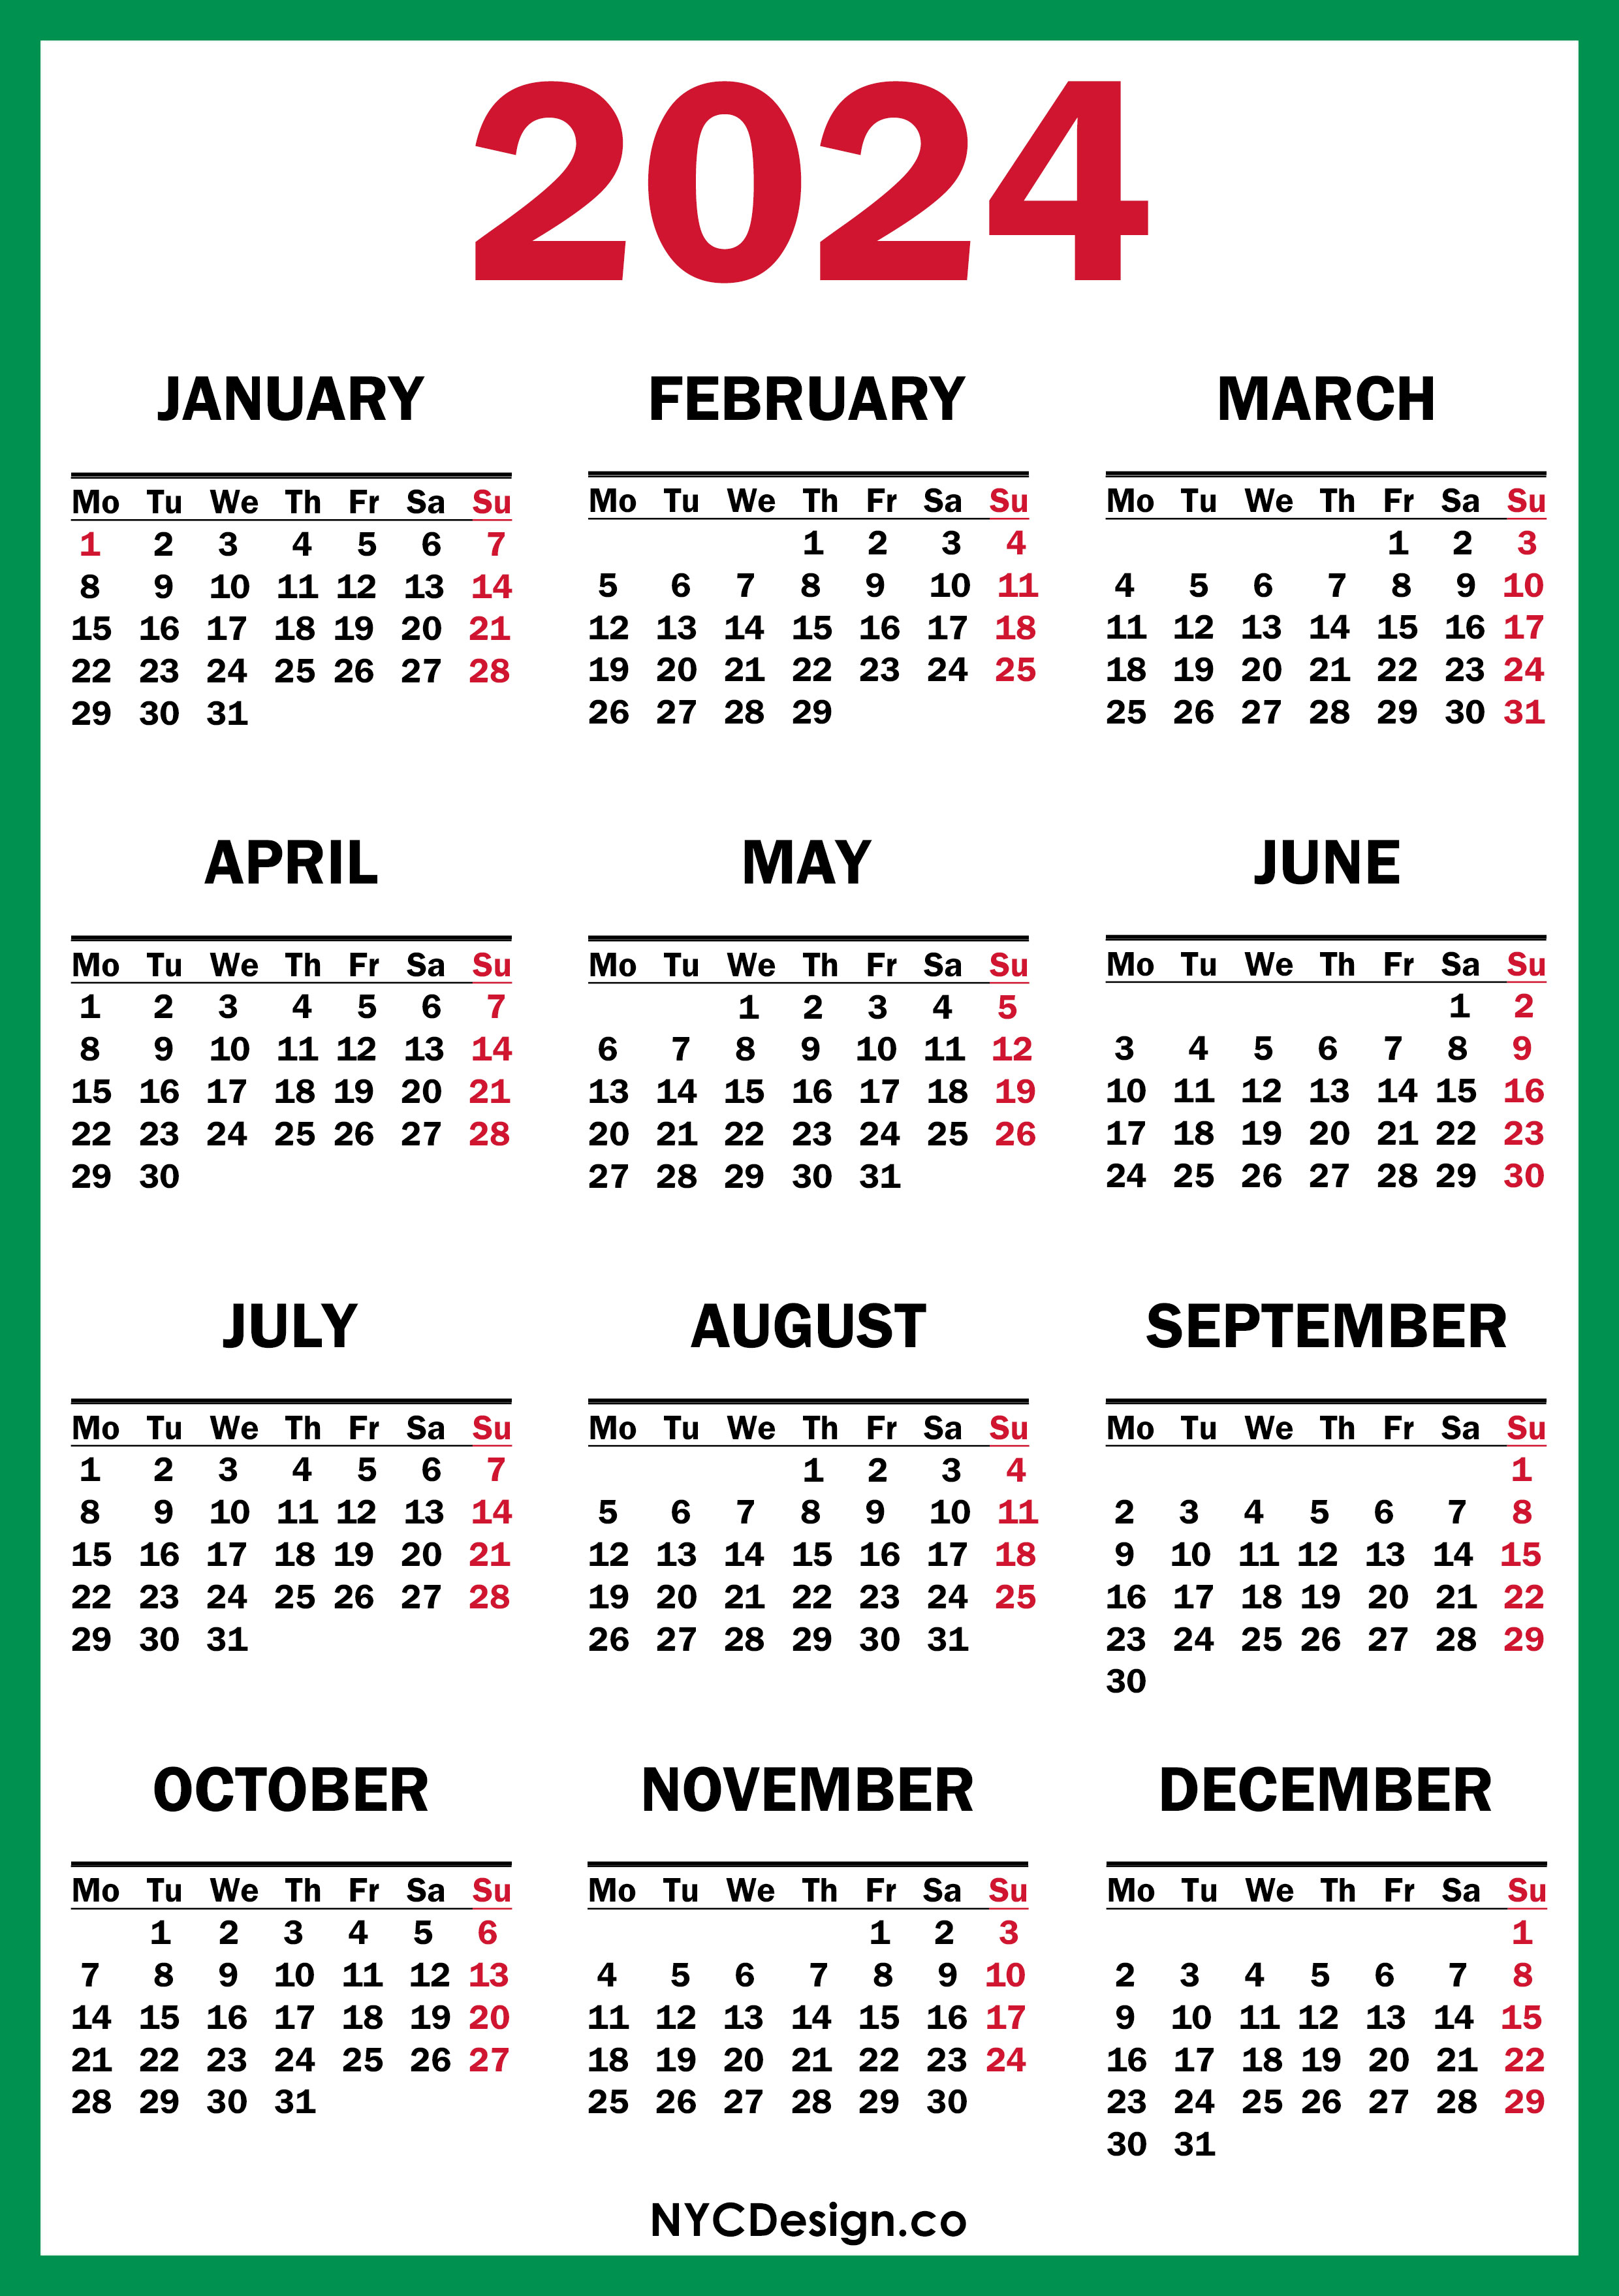 make a calendar november at starfall